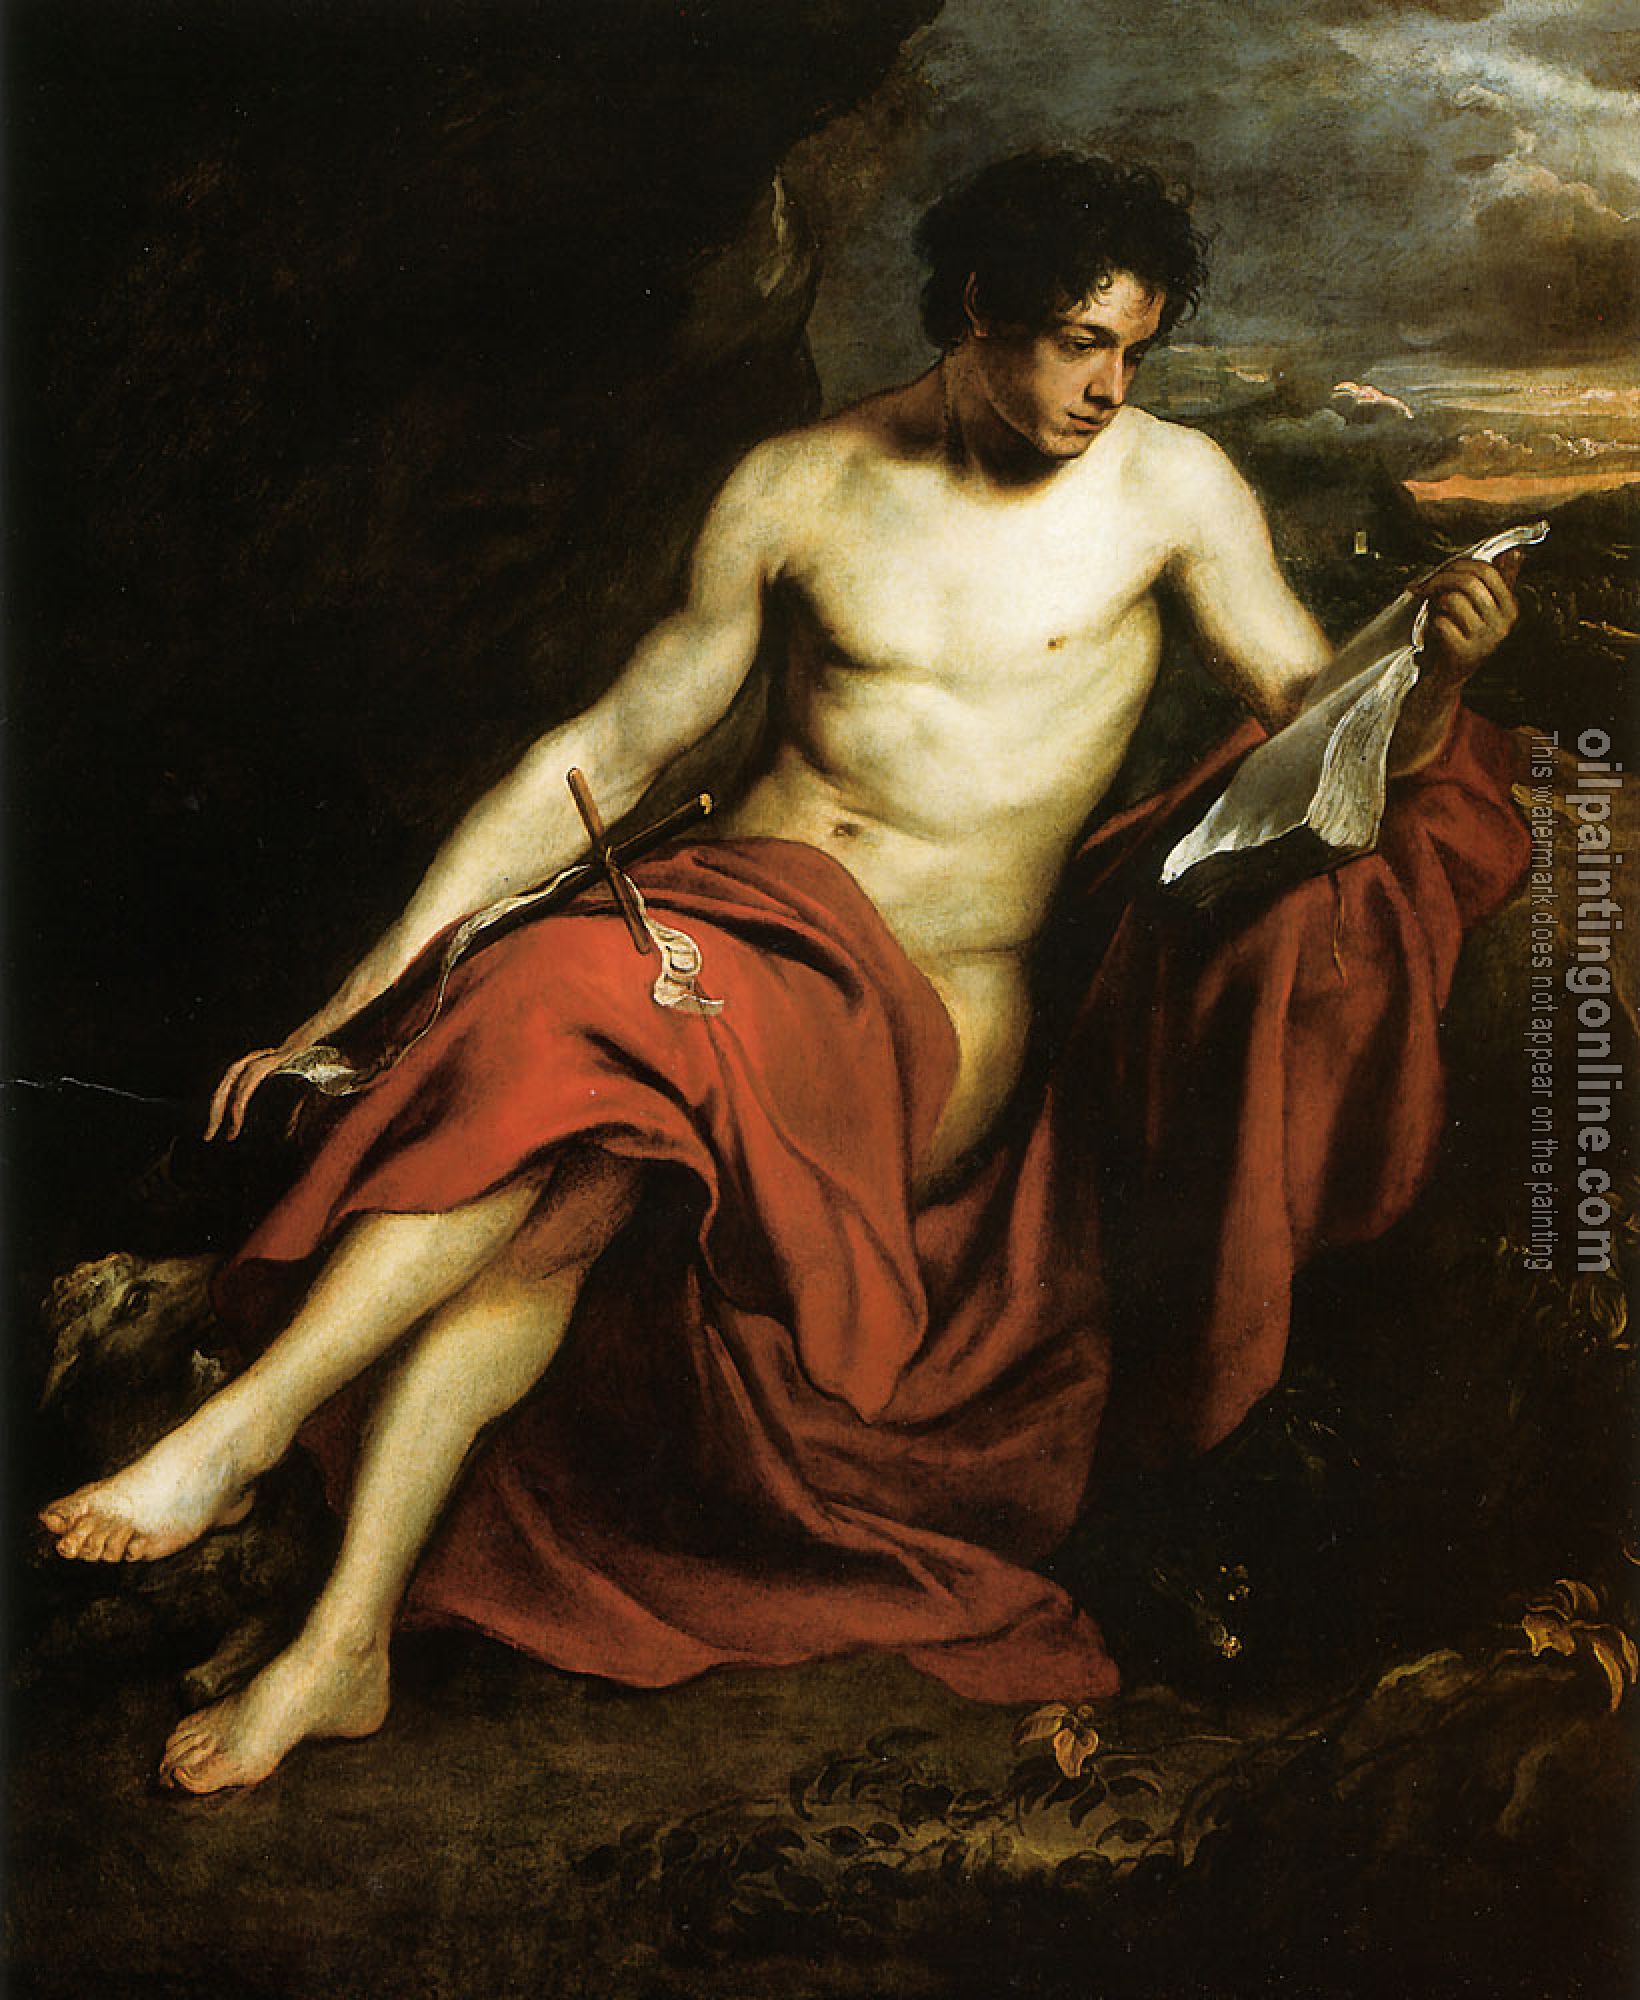 Dyck, Anthony van - Saint John the Baptist in the Wilderness